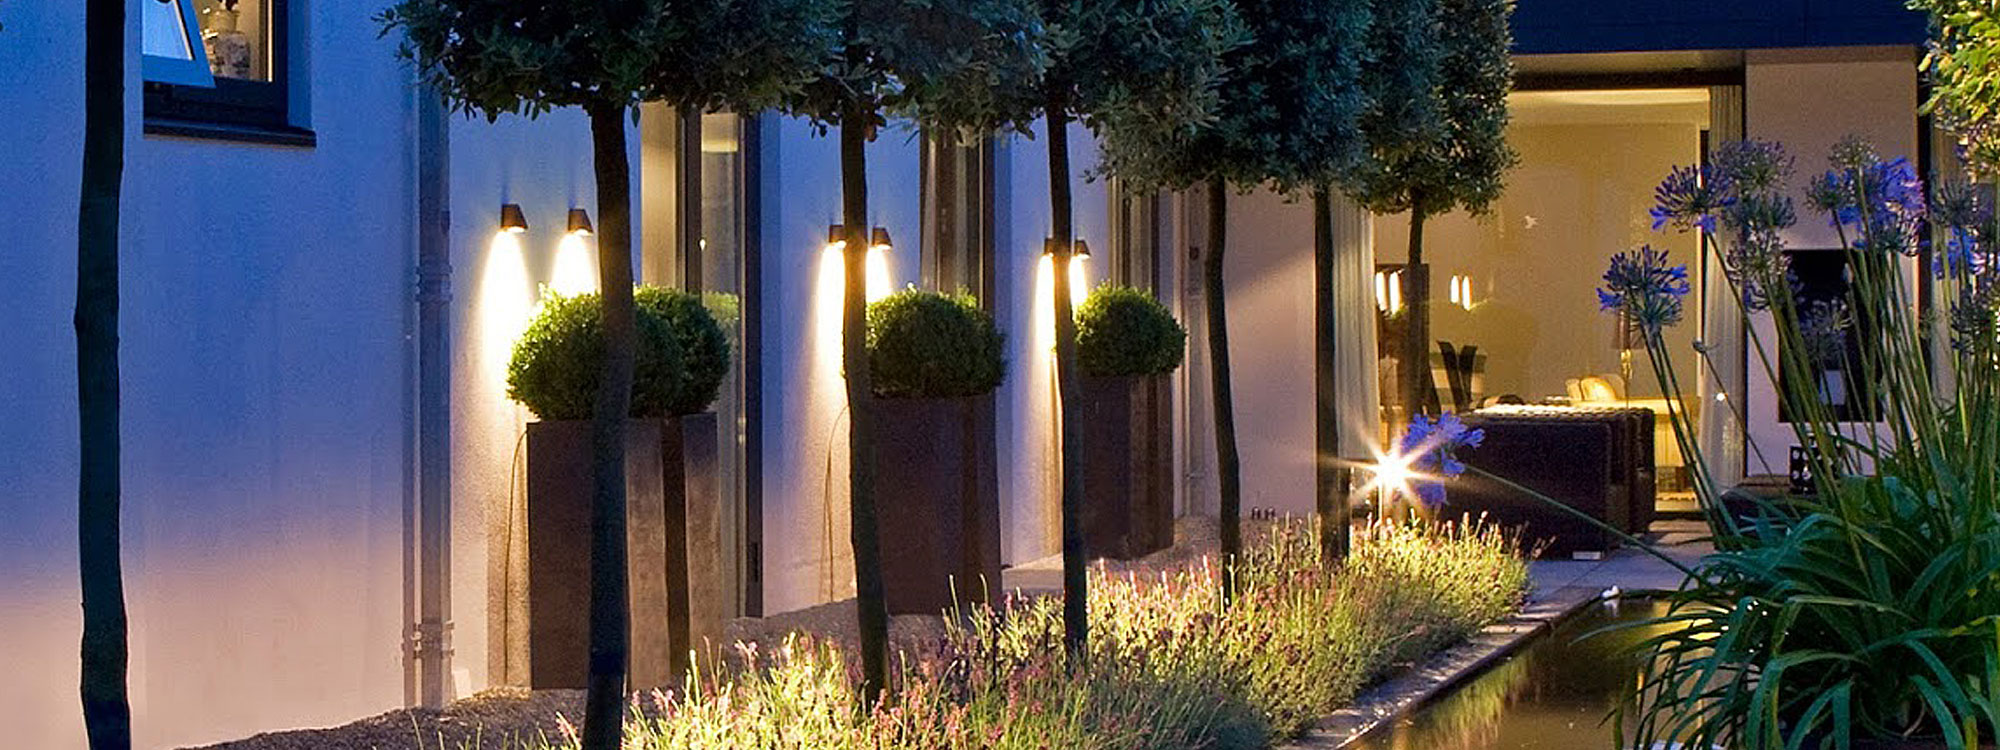 Royal Botania Outdoor Lighting - BEAMY High Quality Modern Garden Lighting.